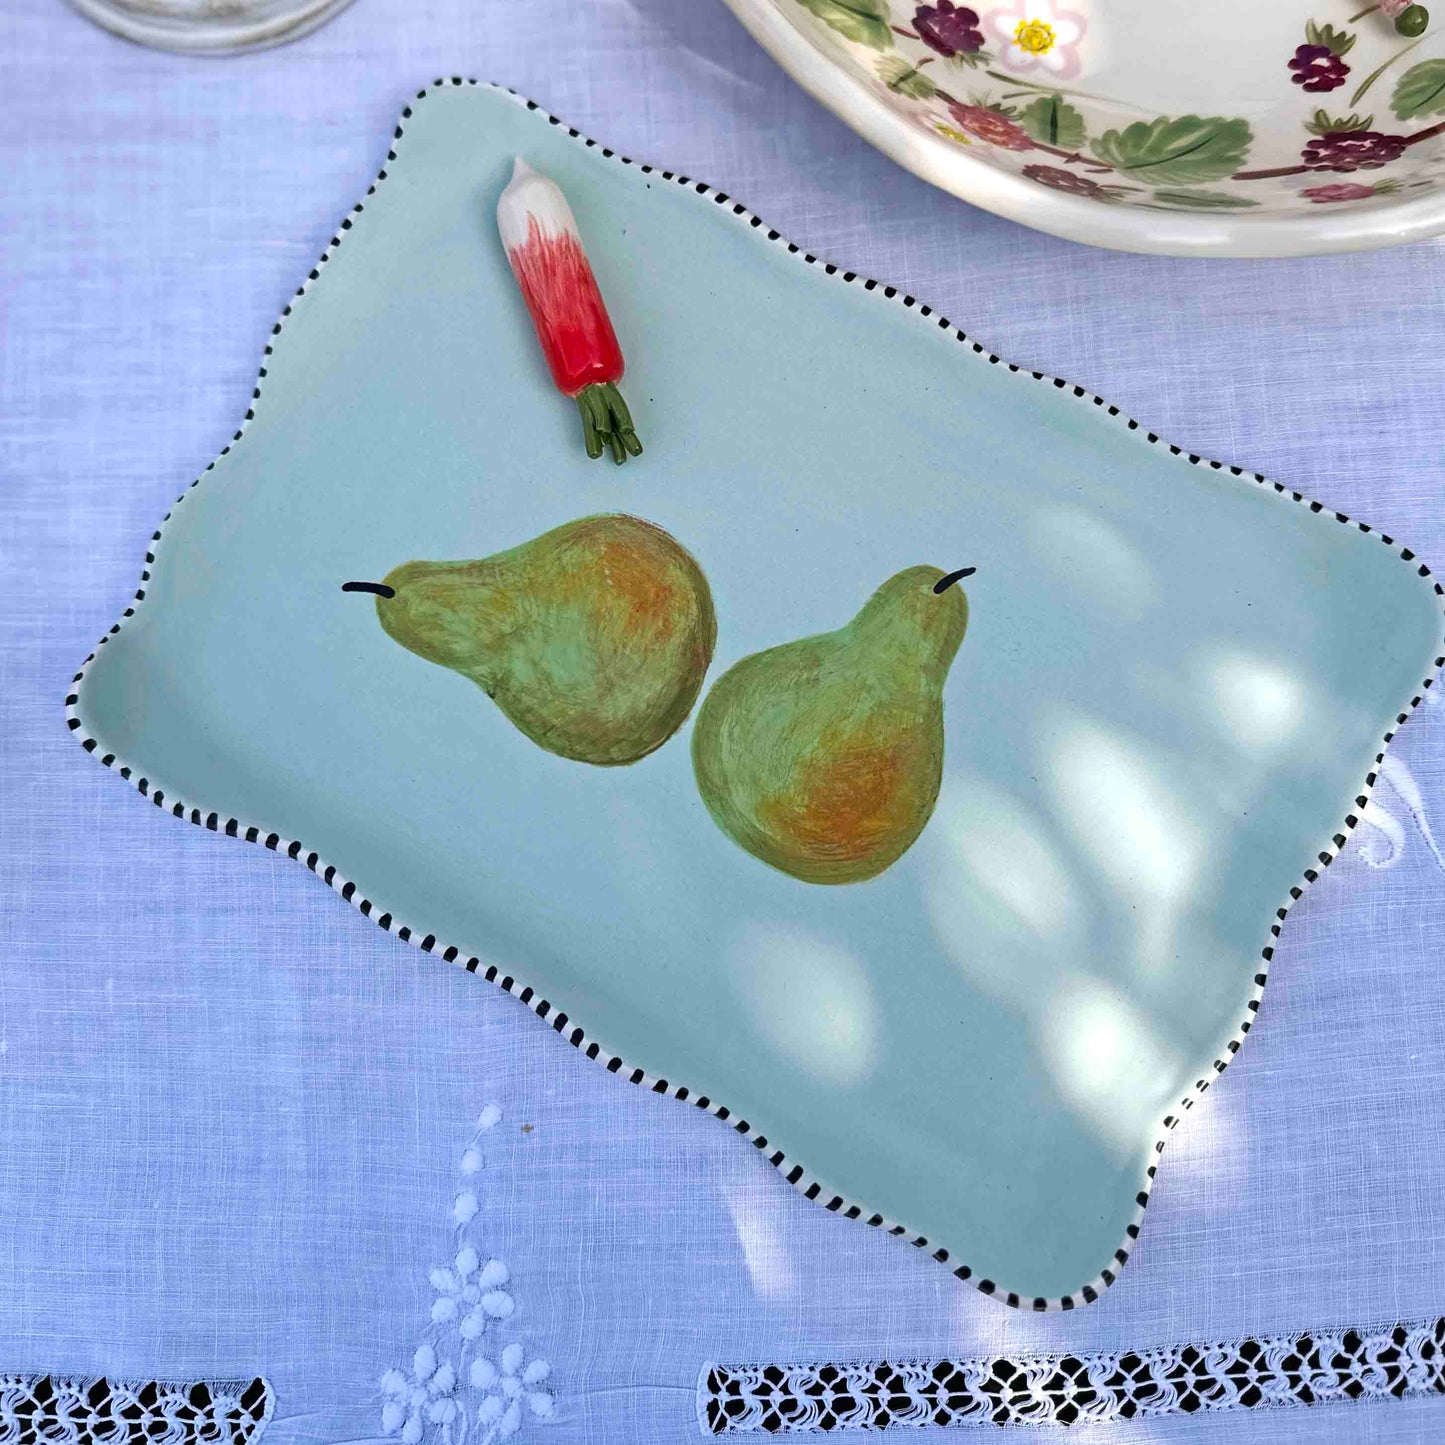 Pear Canapé Platter